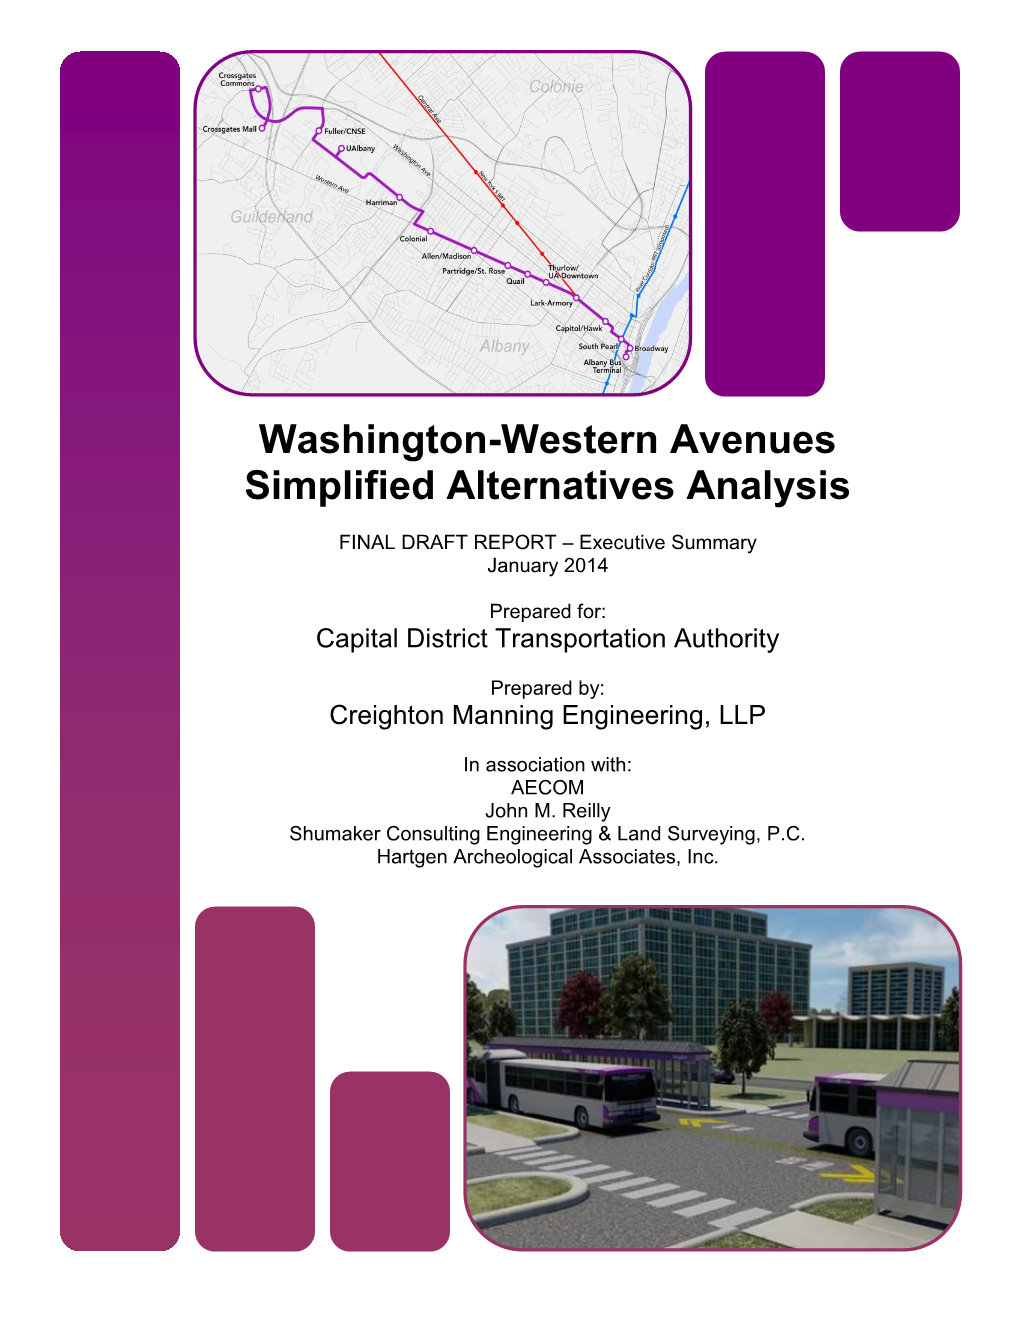 Washington-Western Avenues Simplified Alternatives Analysis